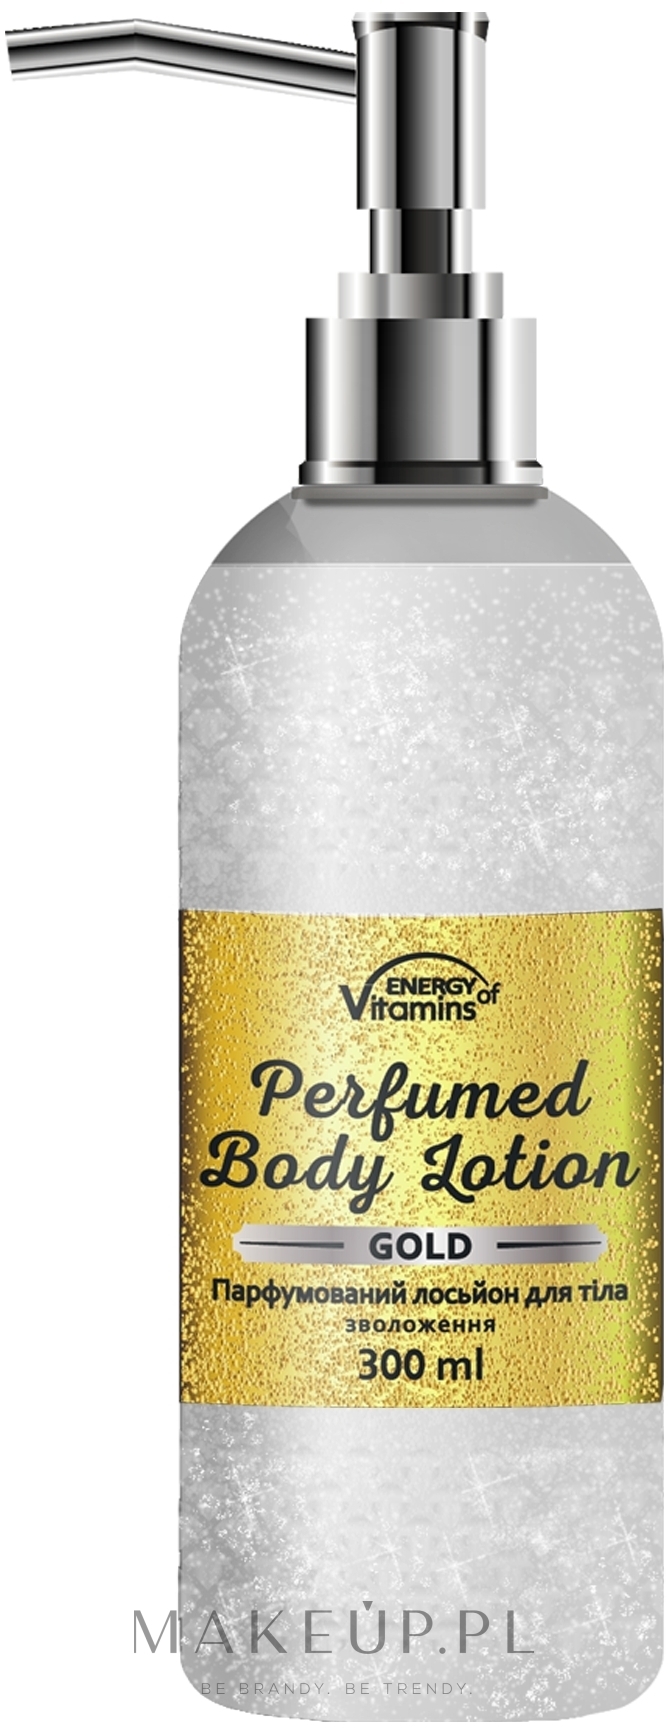 Perfumowany balsam do ciała - Energy of Vitamins Perfumed Gold — Zdjęcie 300 ml